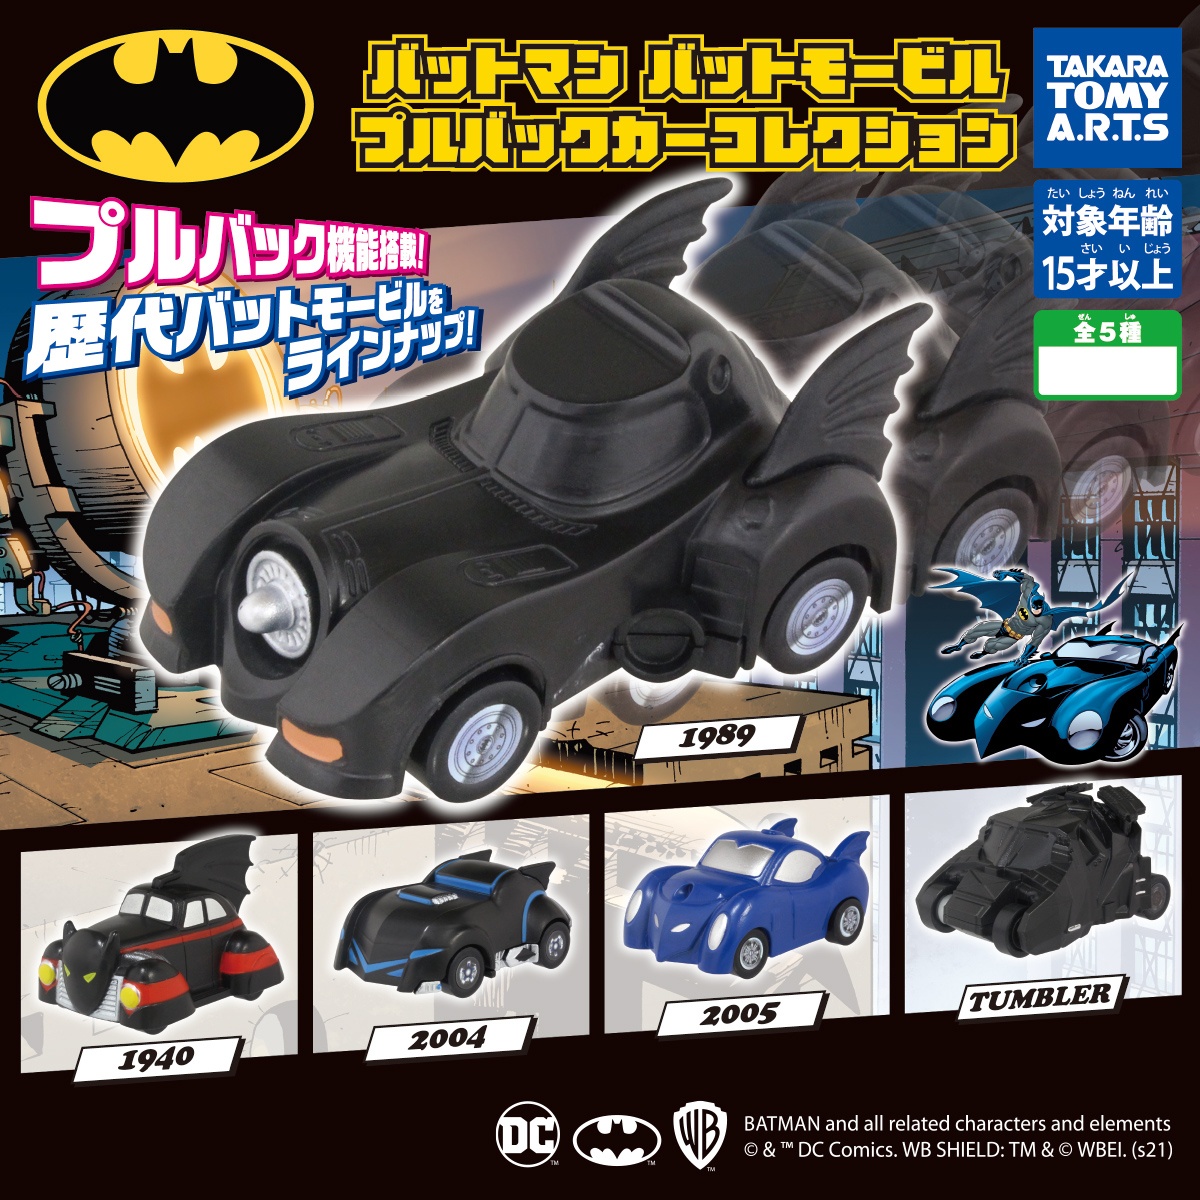 Batman Chrome Limited Edition Pull Back Batmobile Series Set of 7 BK 